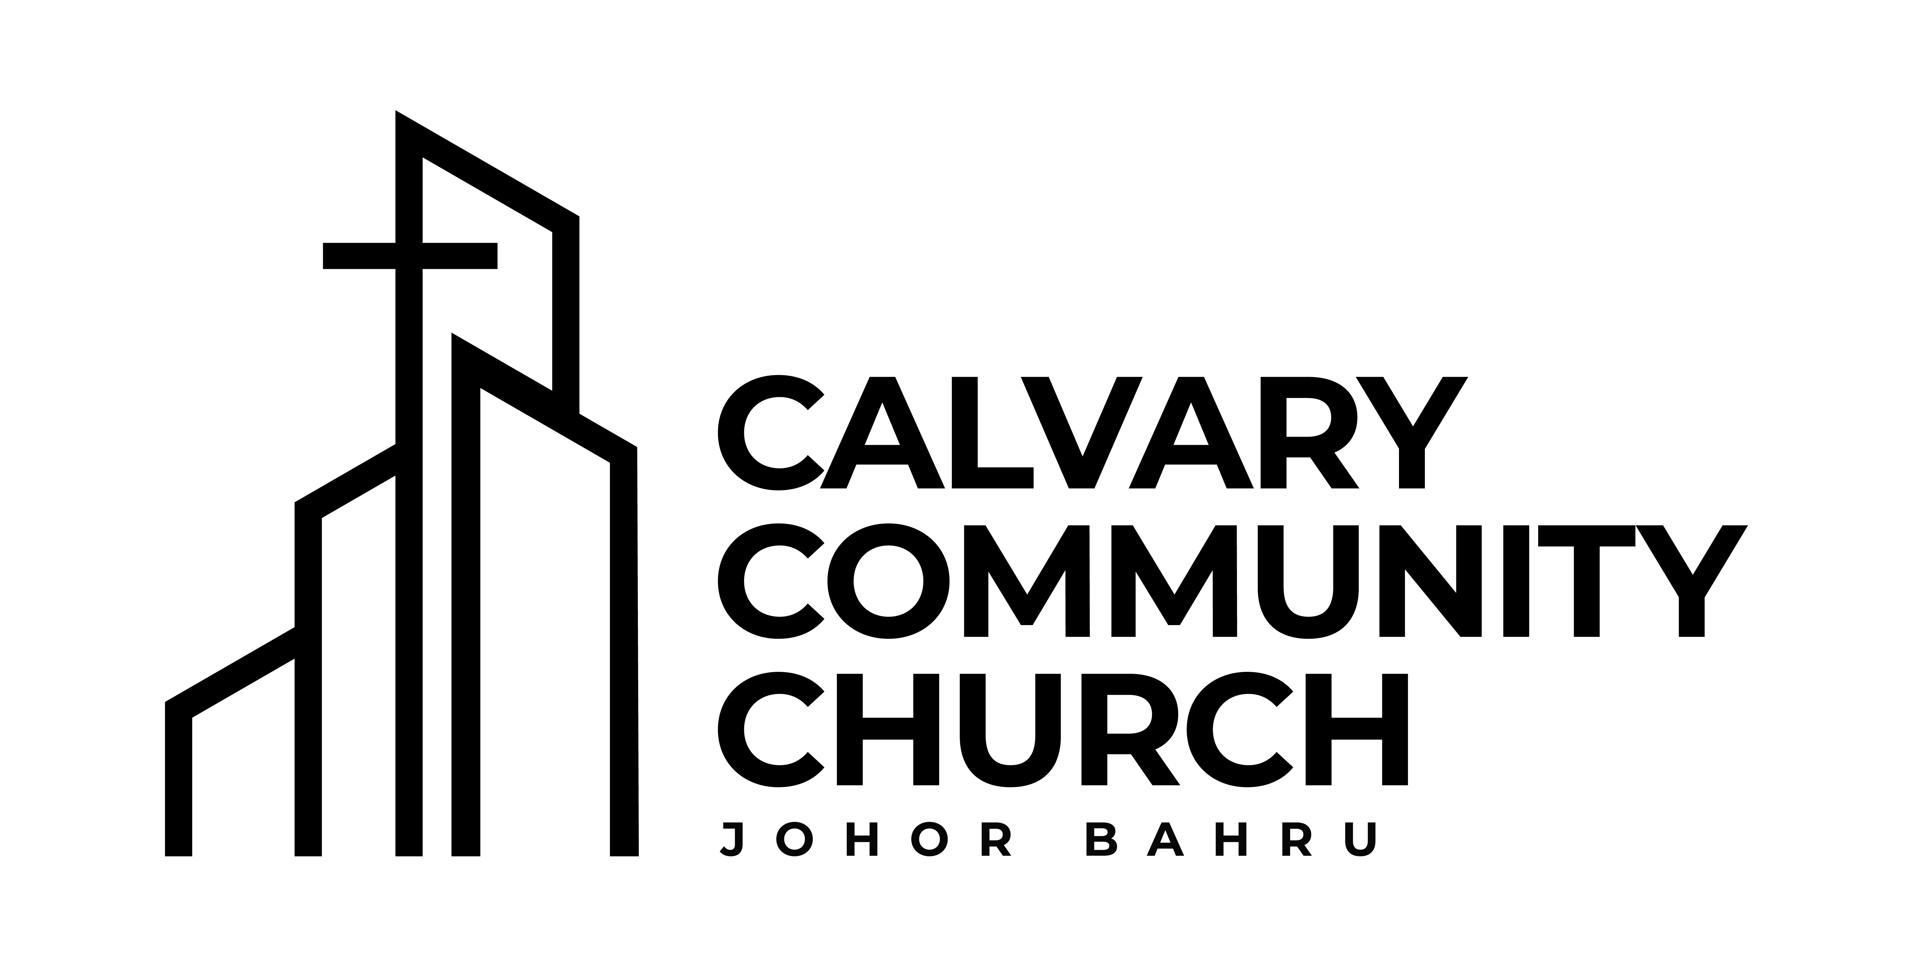 Calvary Community Church Johor Bahru